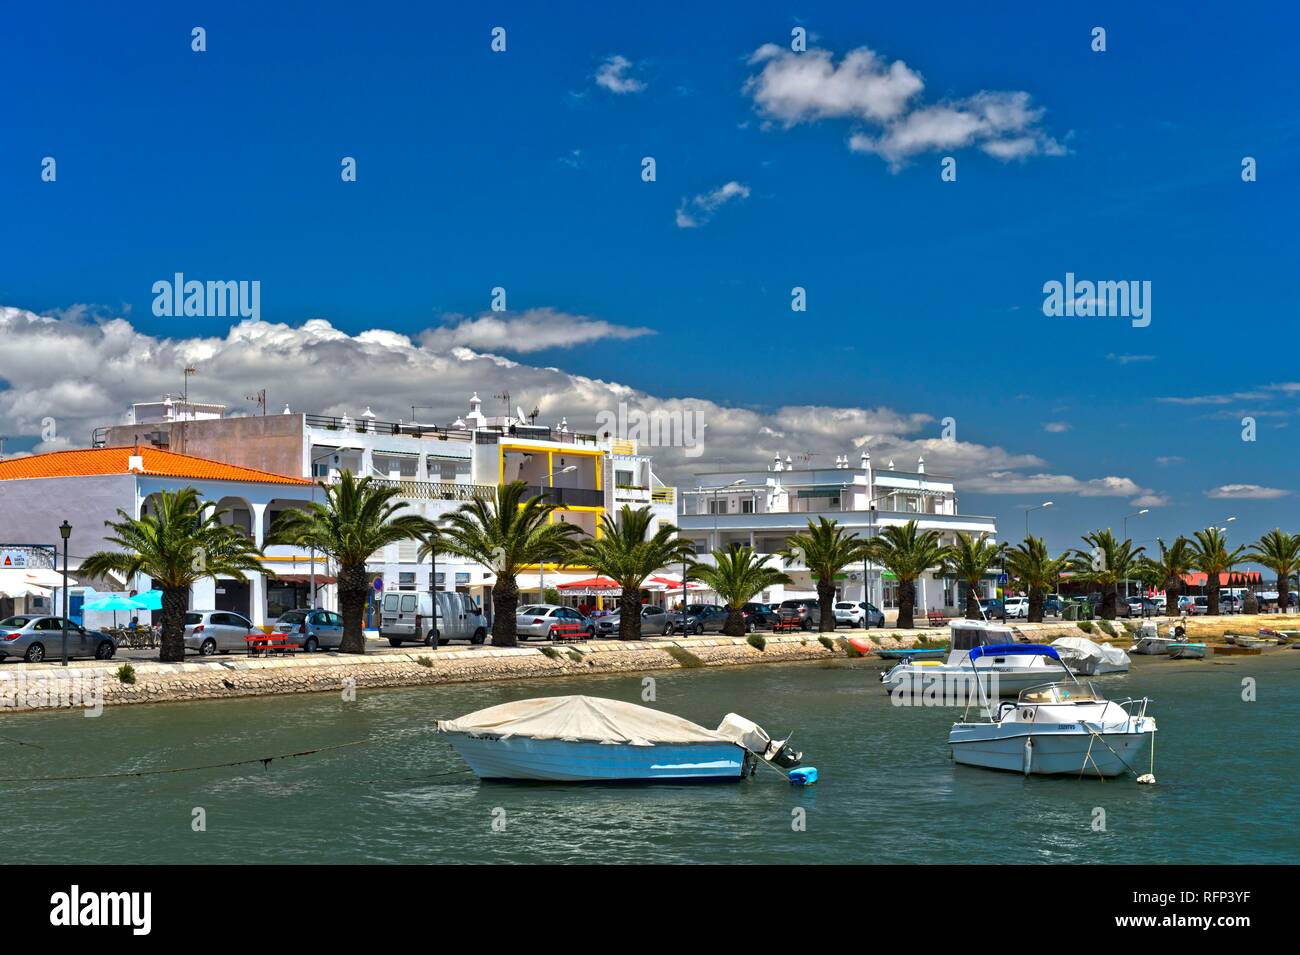 Waterfront, Santa Luzia, Algarve, Portugal Foto de stock